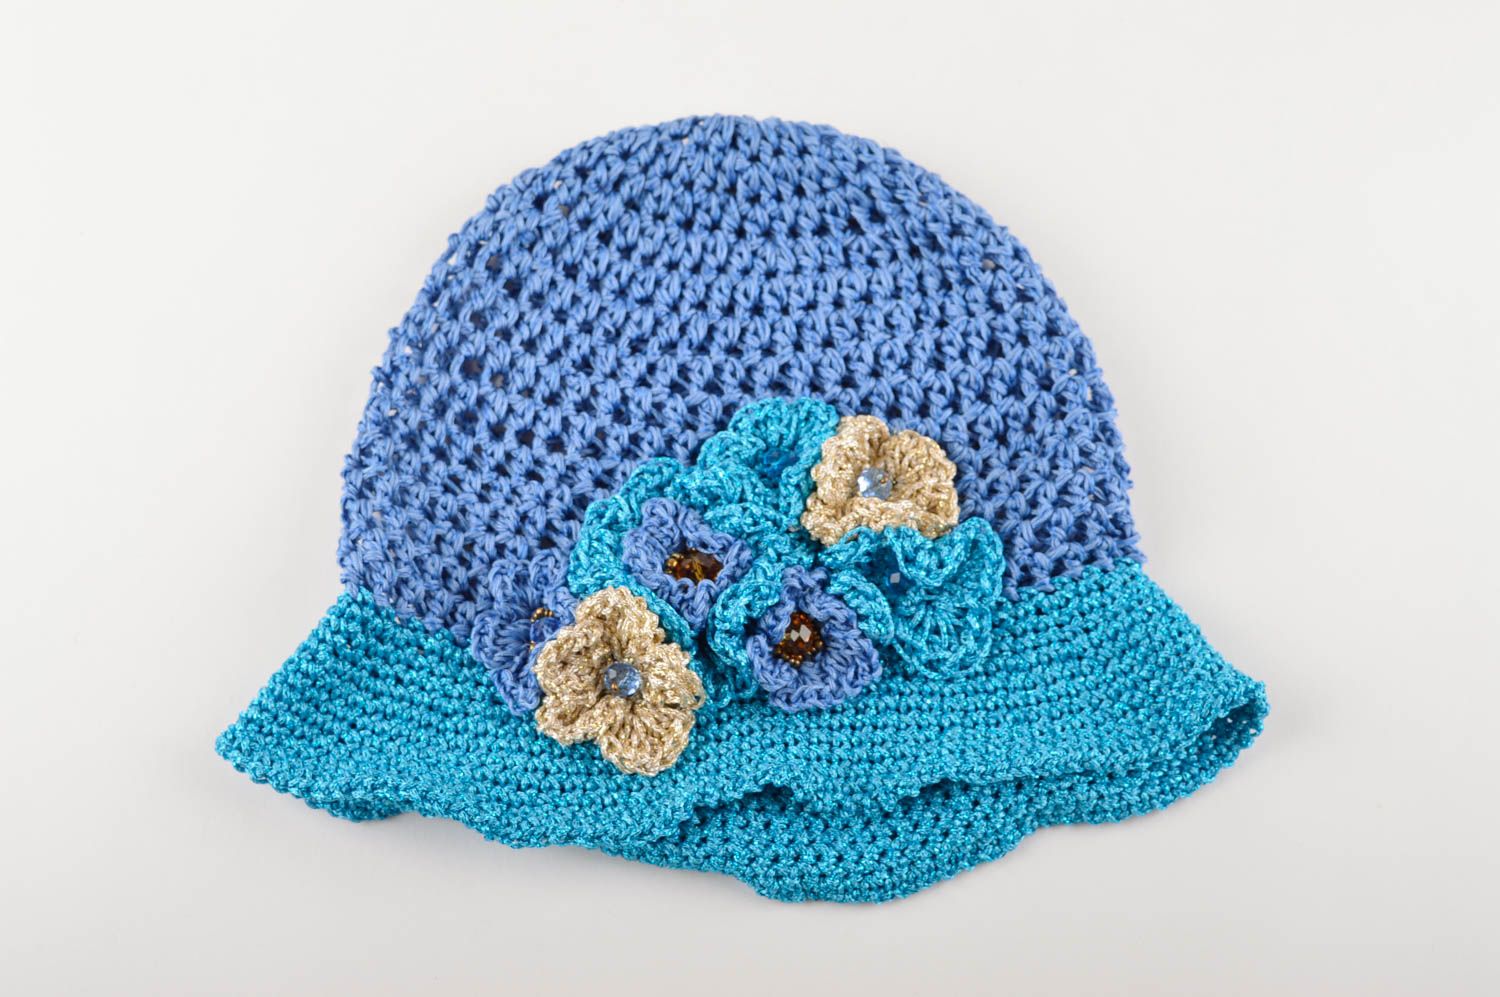 Handmade crochet hat summer hat ladies sun hats designer accessories gift ideas photo 5